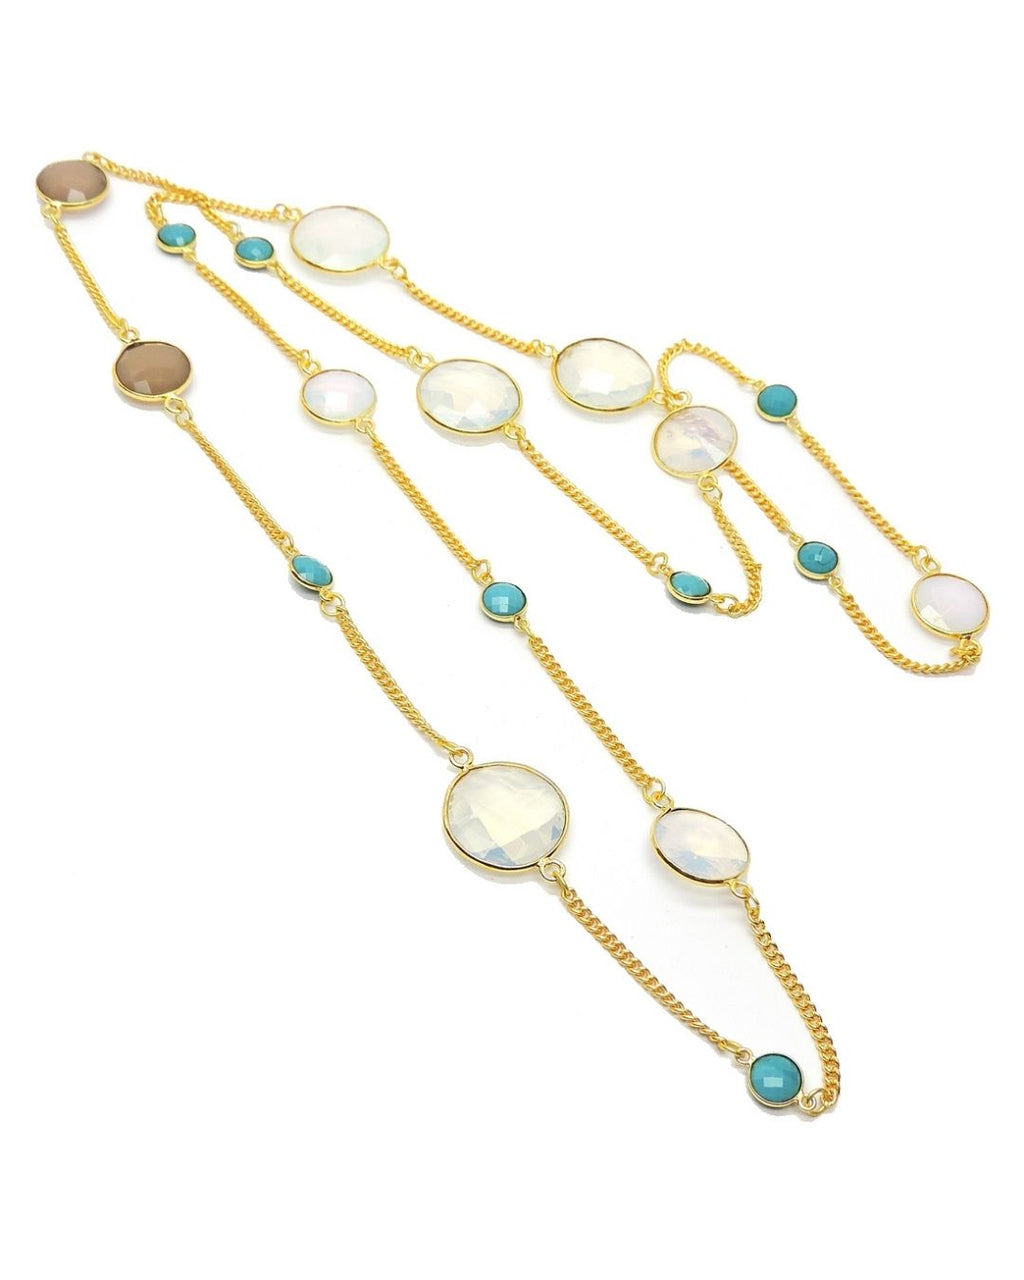 Lerato Necklace - Necklaces - Handcrafted Jewellery - Made in India - Dubai Jewellery, Fashion & Lifestyle - Dori